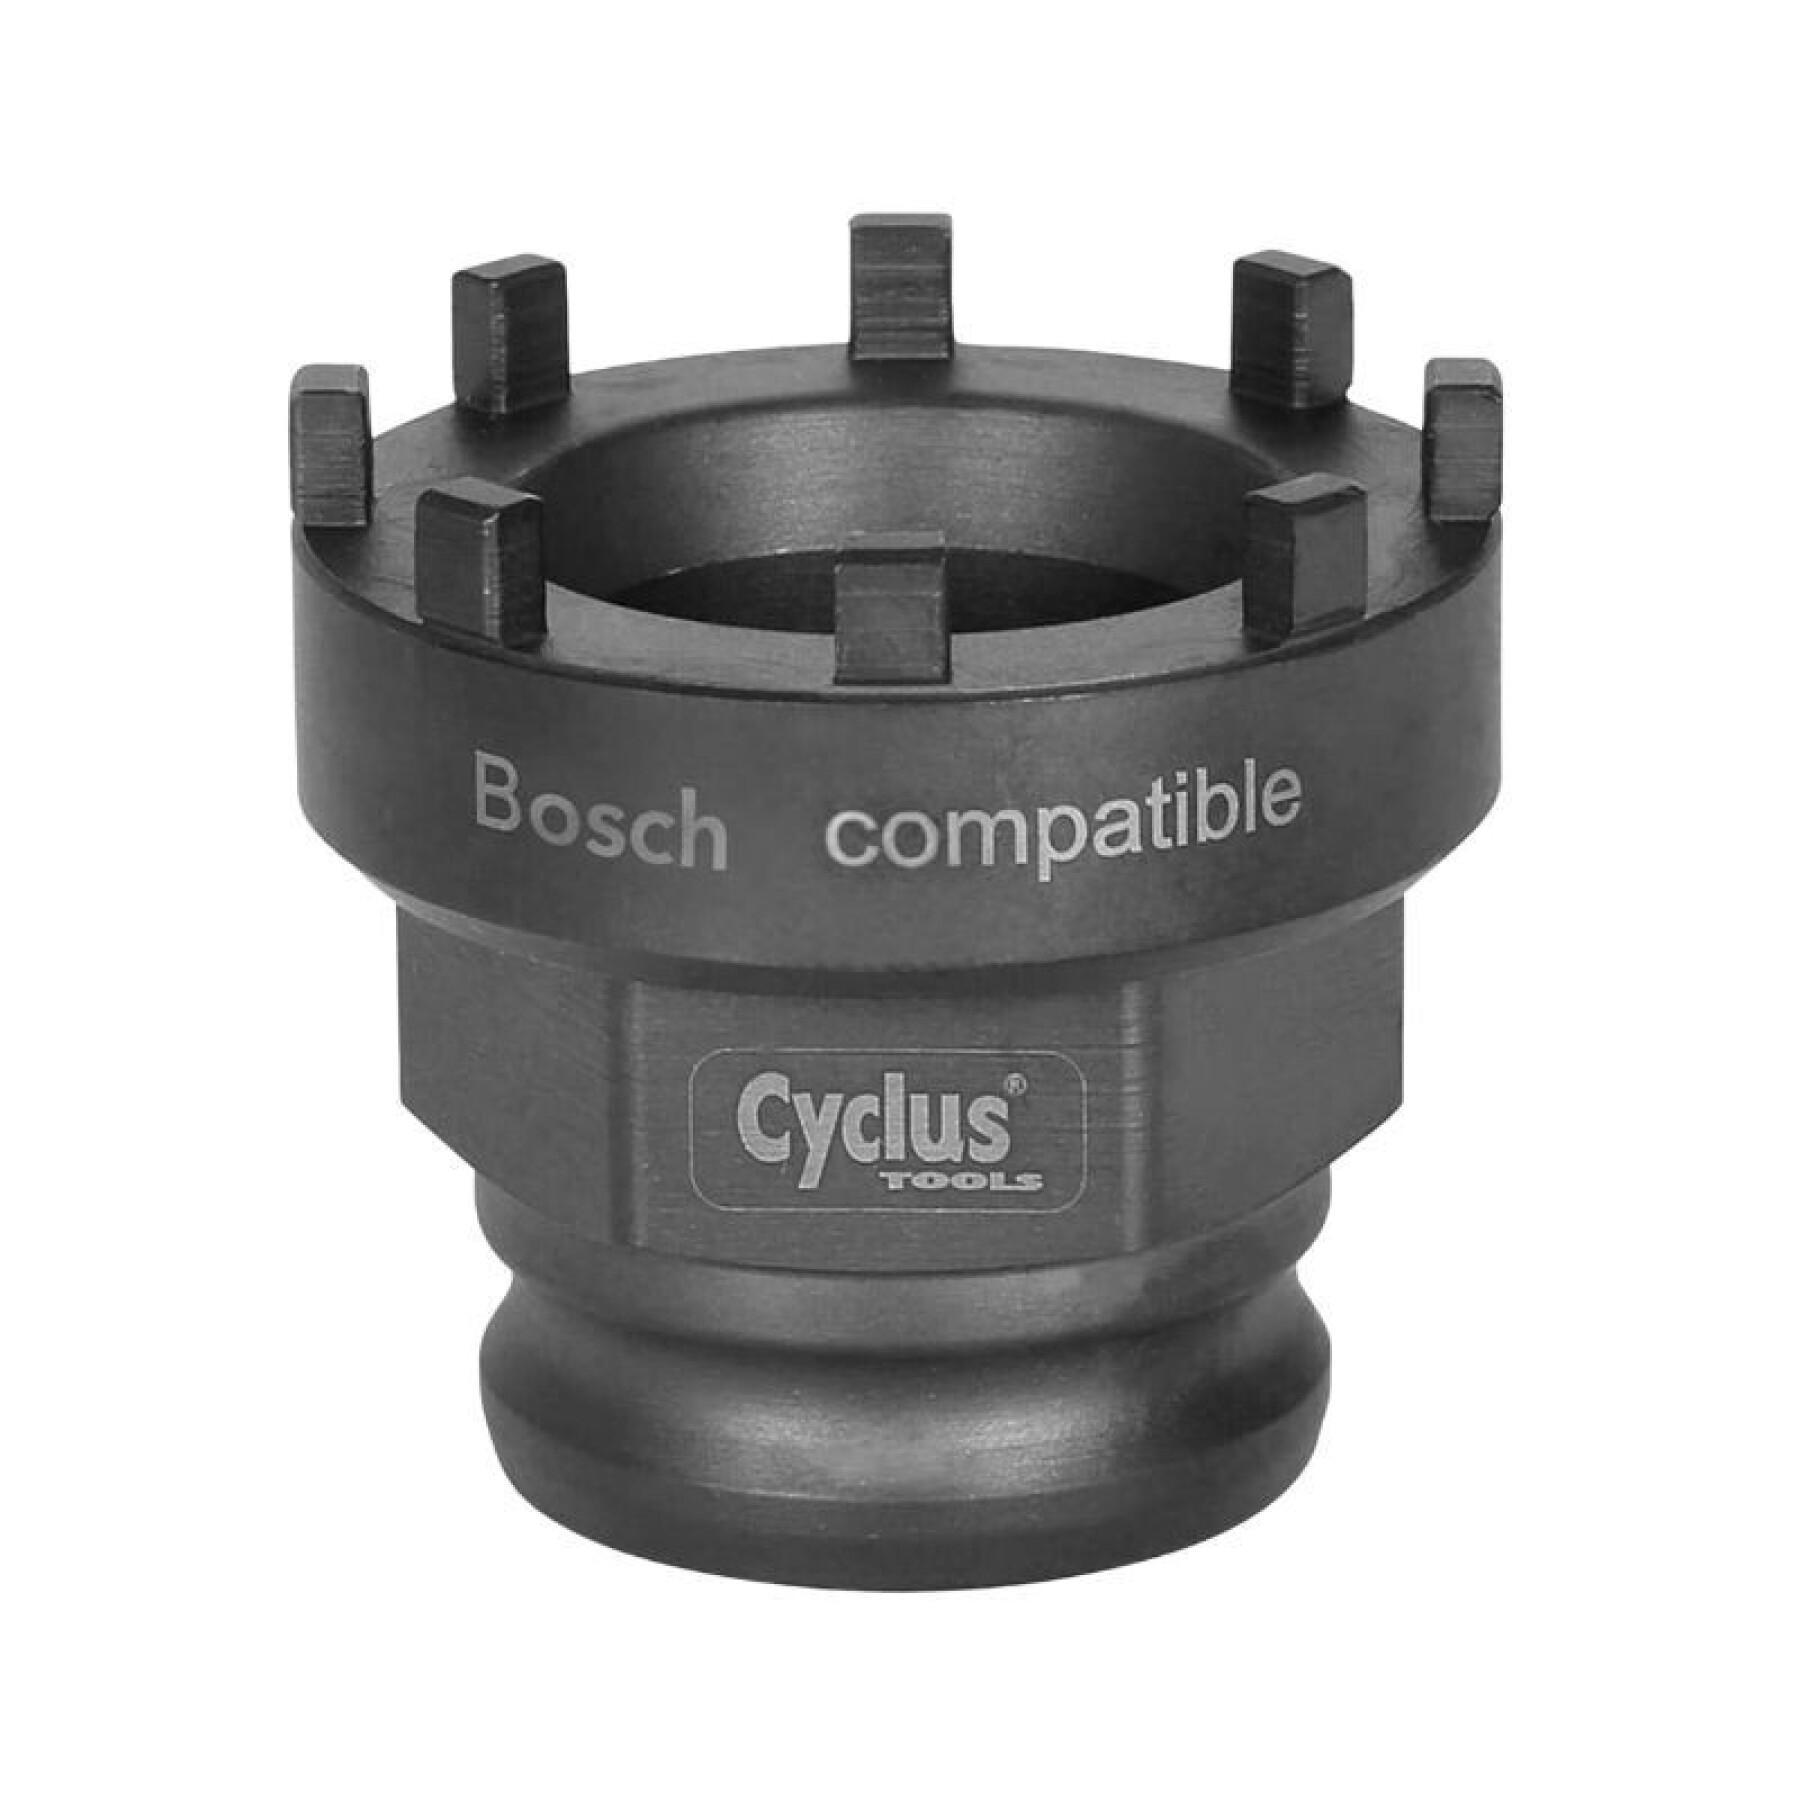 Outil pro démonte écrou Cyclus vae Bosch BDU3XX -BDU4XX snap.in 179967